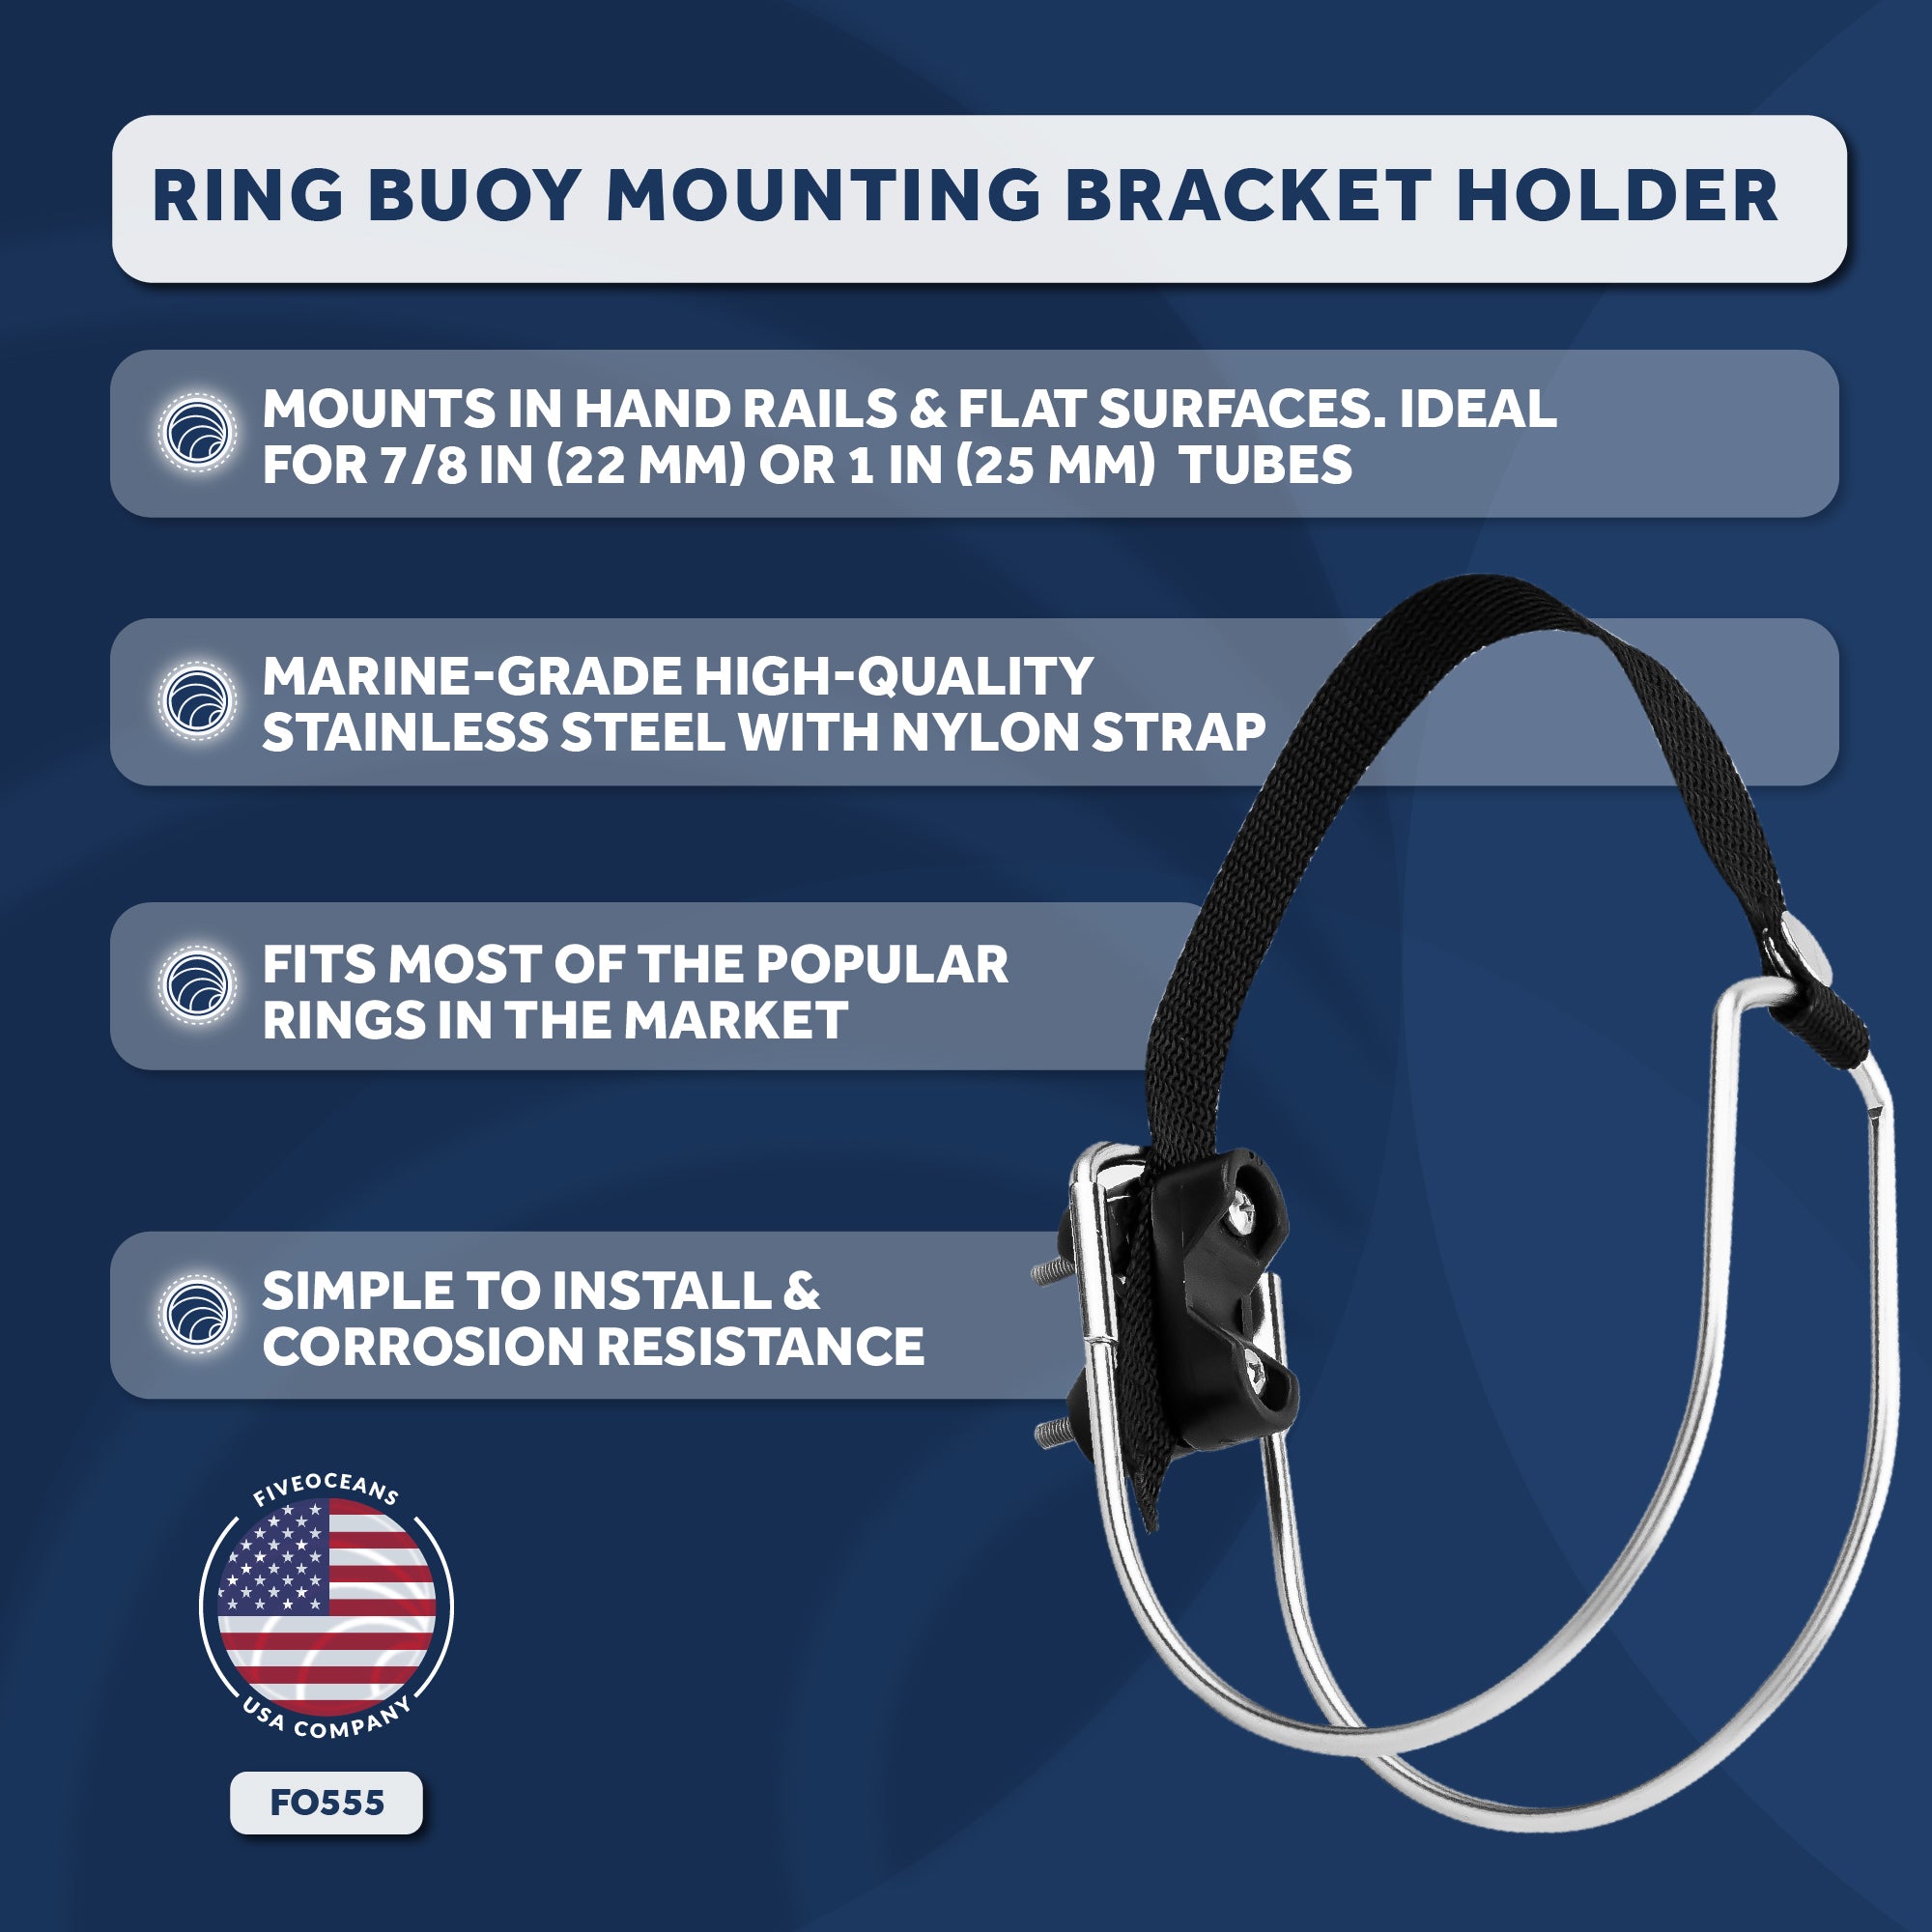 Ring Buoy Mounting Bracket Holder - FO555